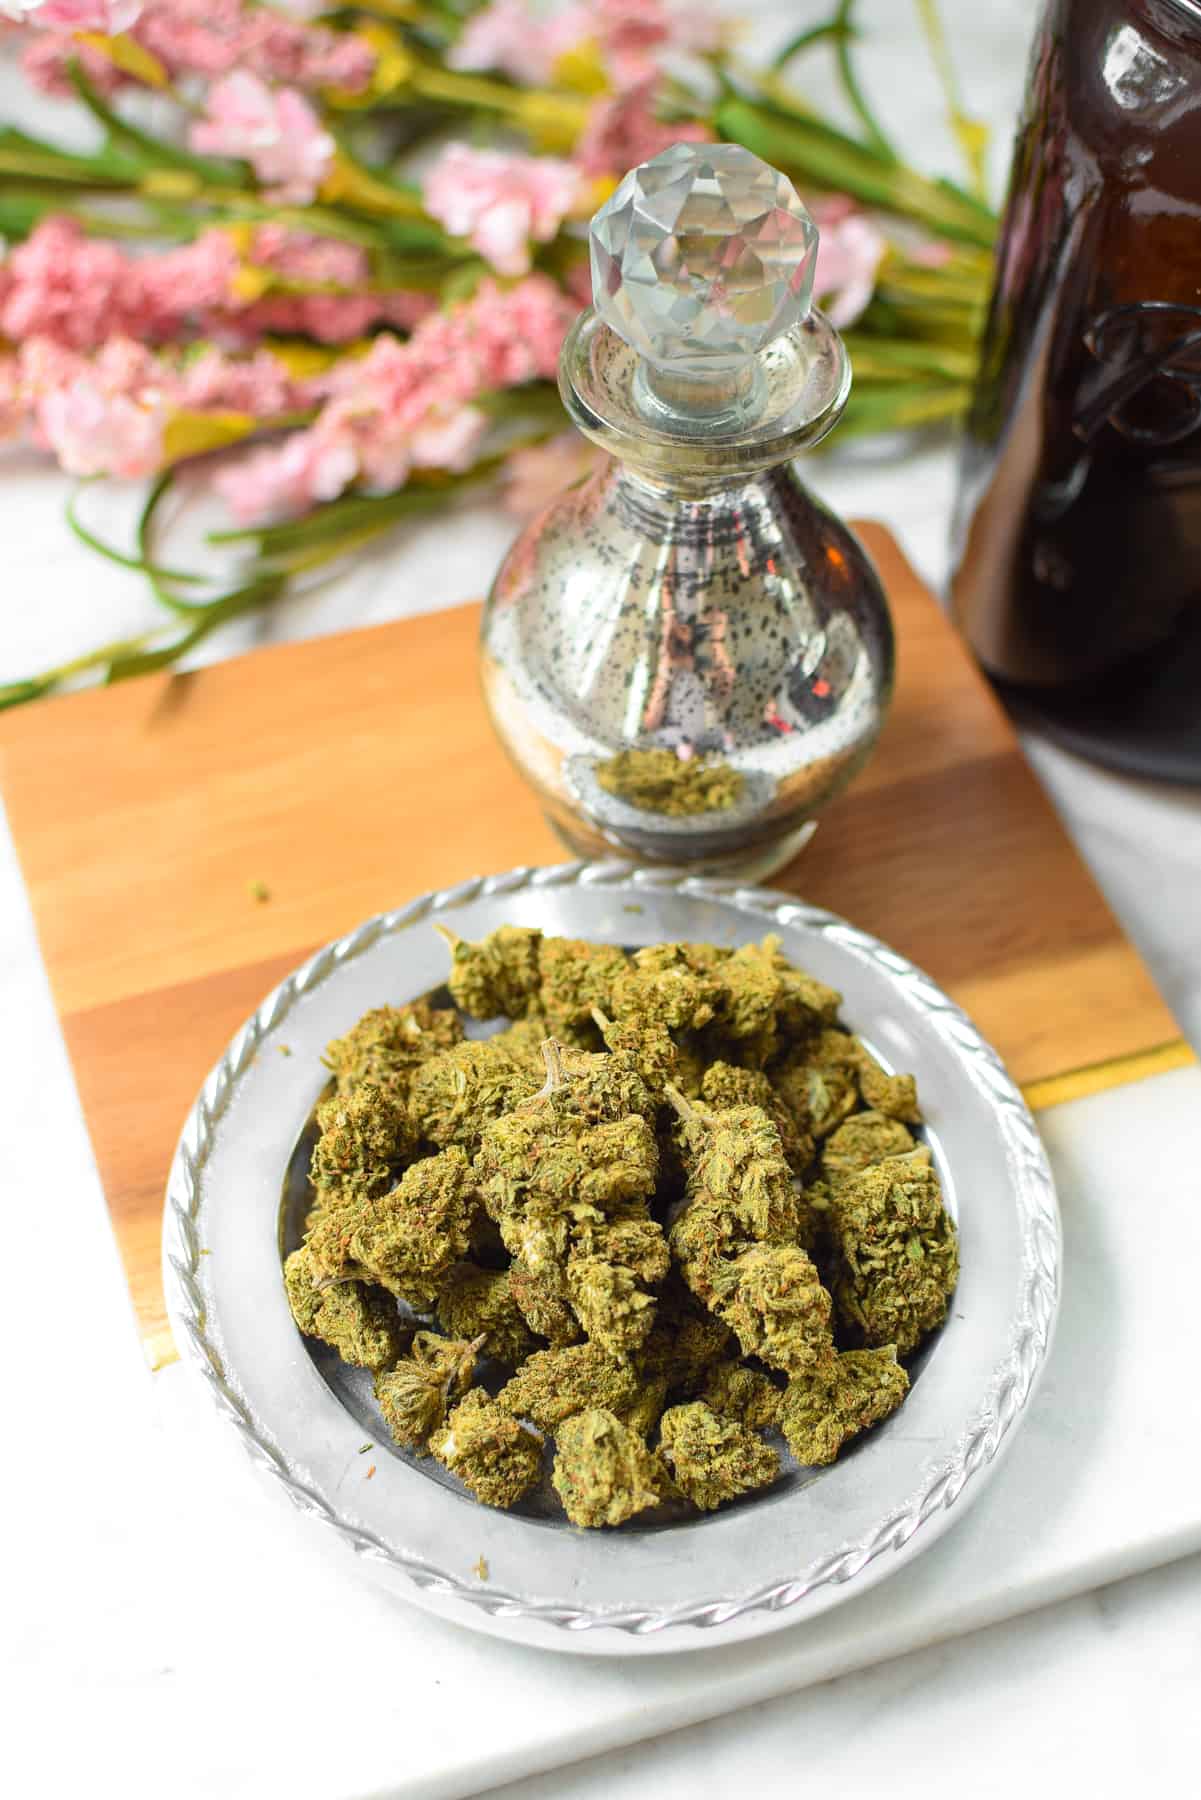 A shallow bowl of green cannabis flower